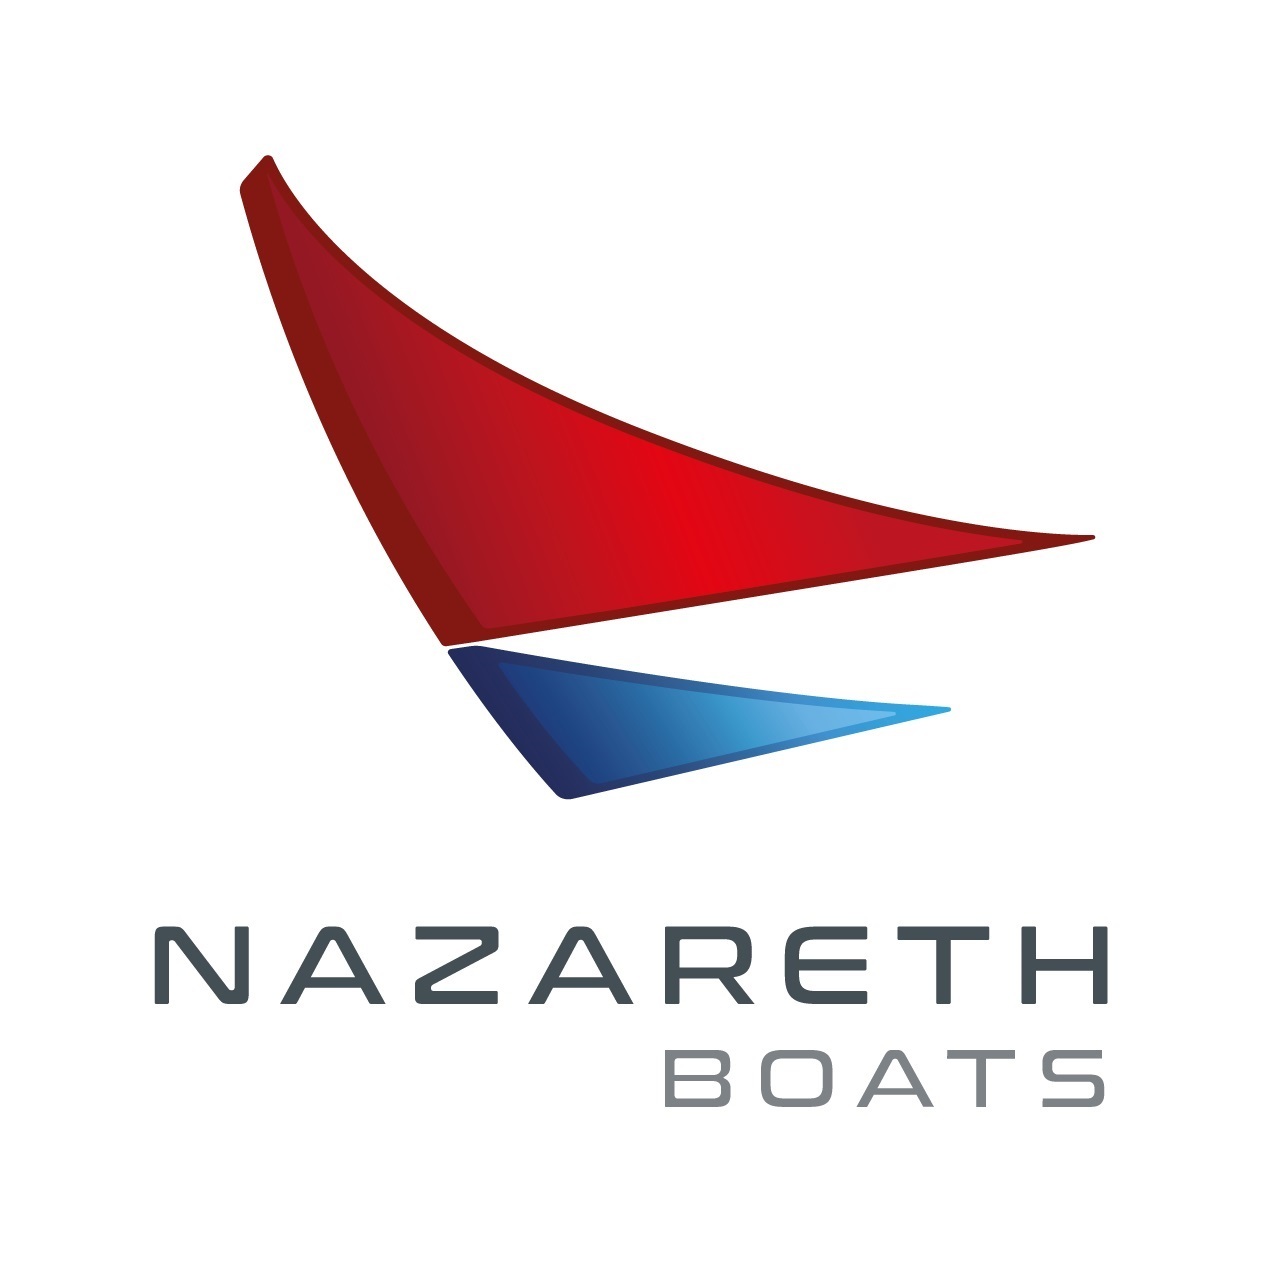 Nazareth Boats